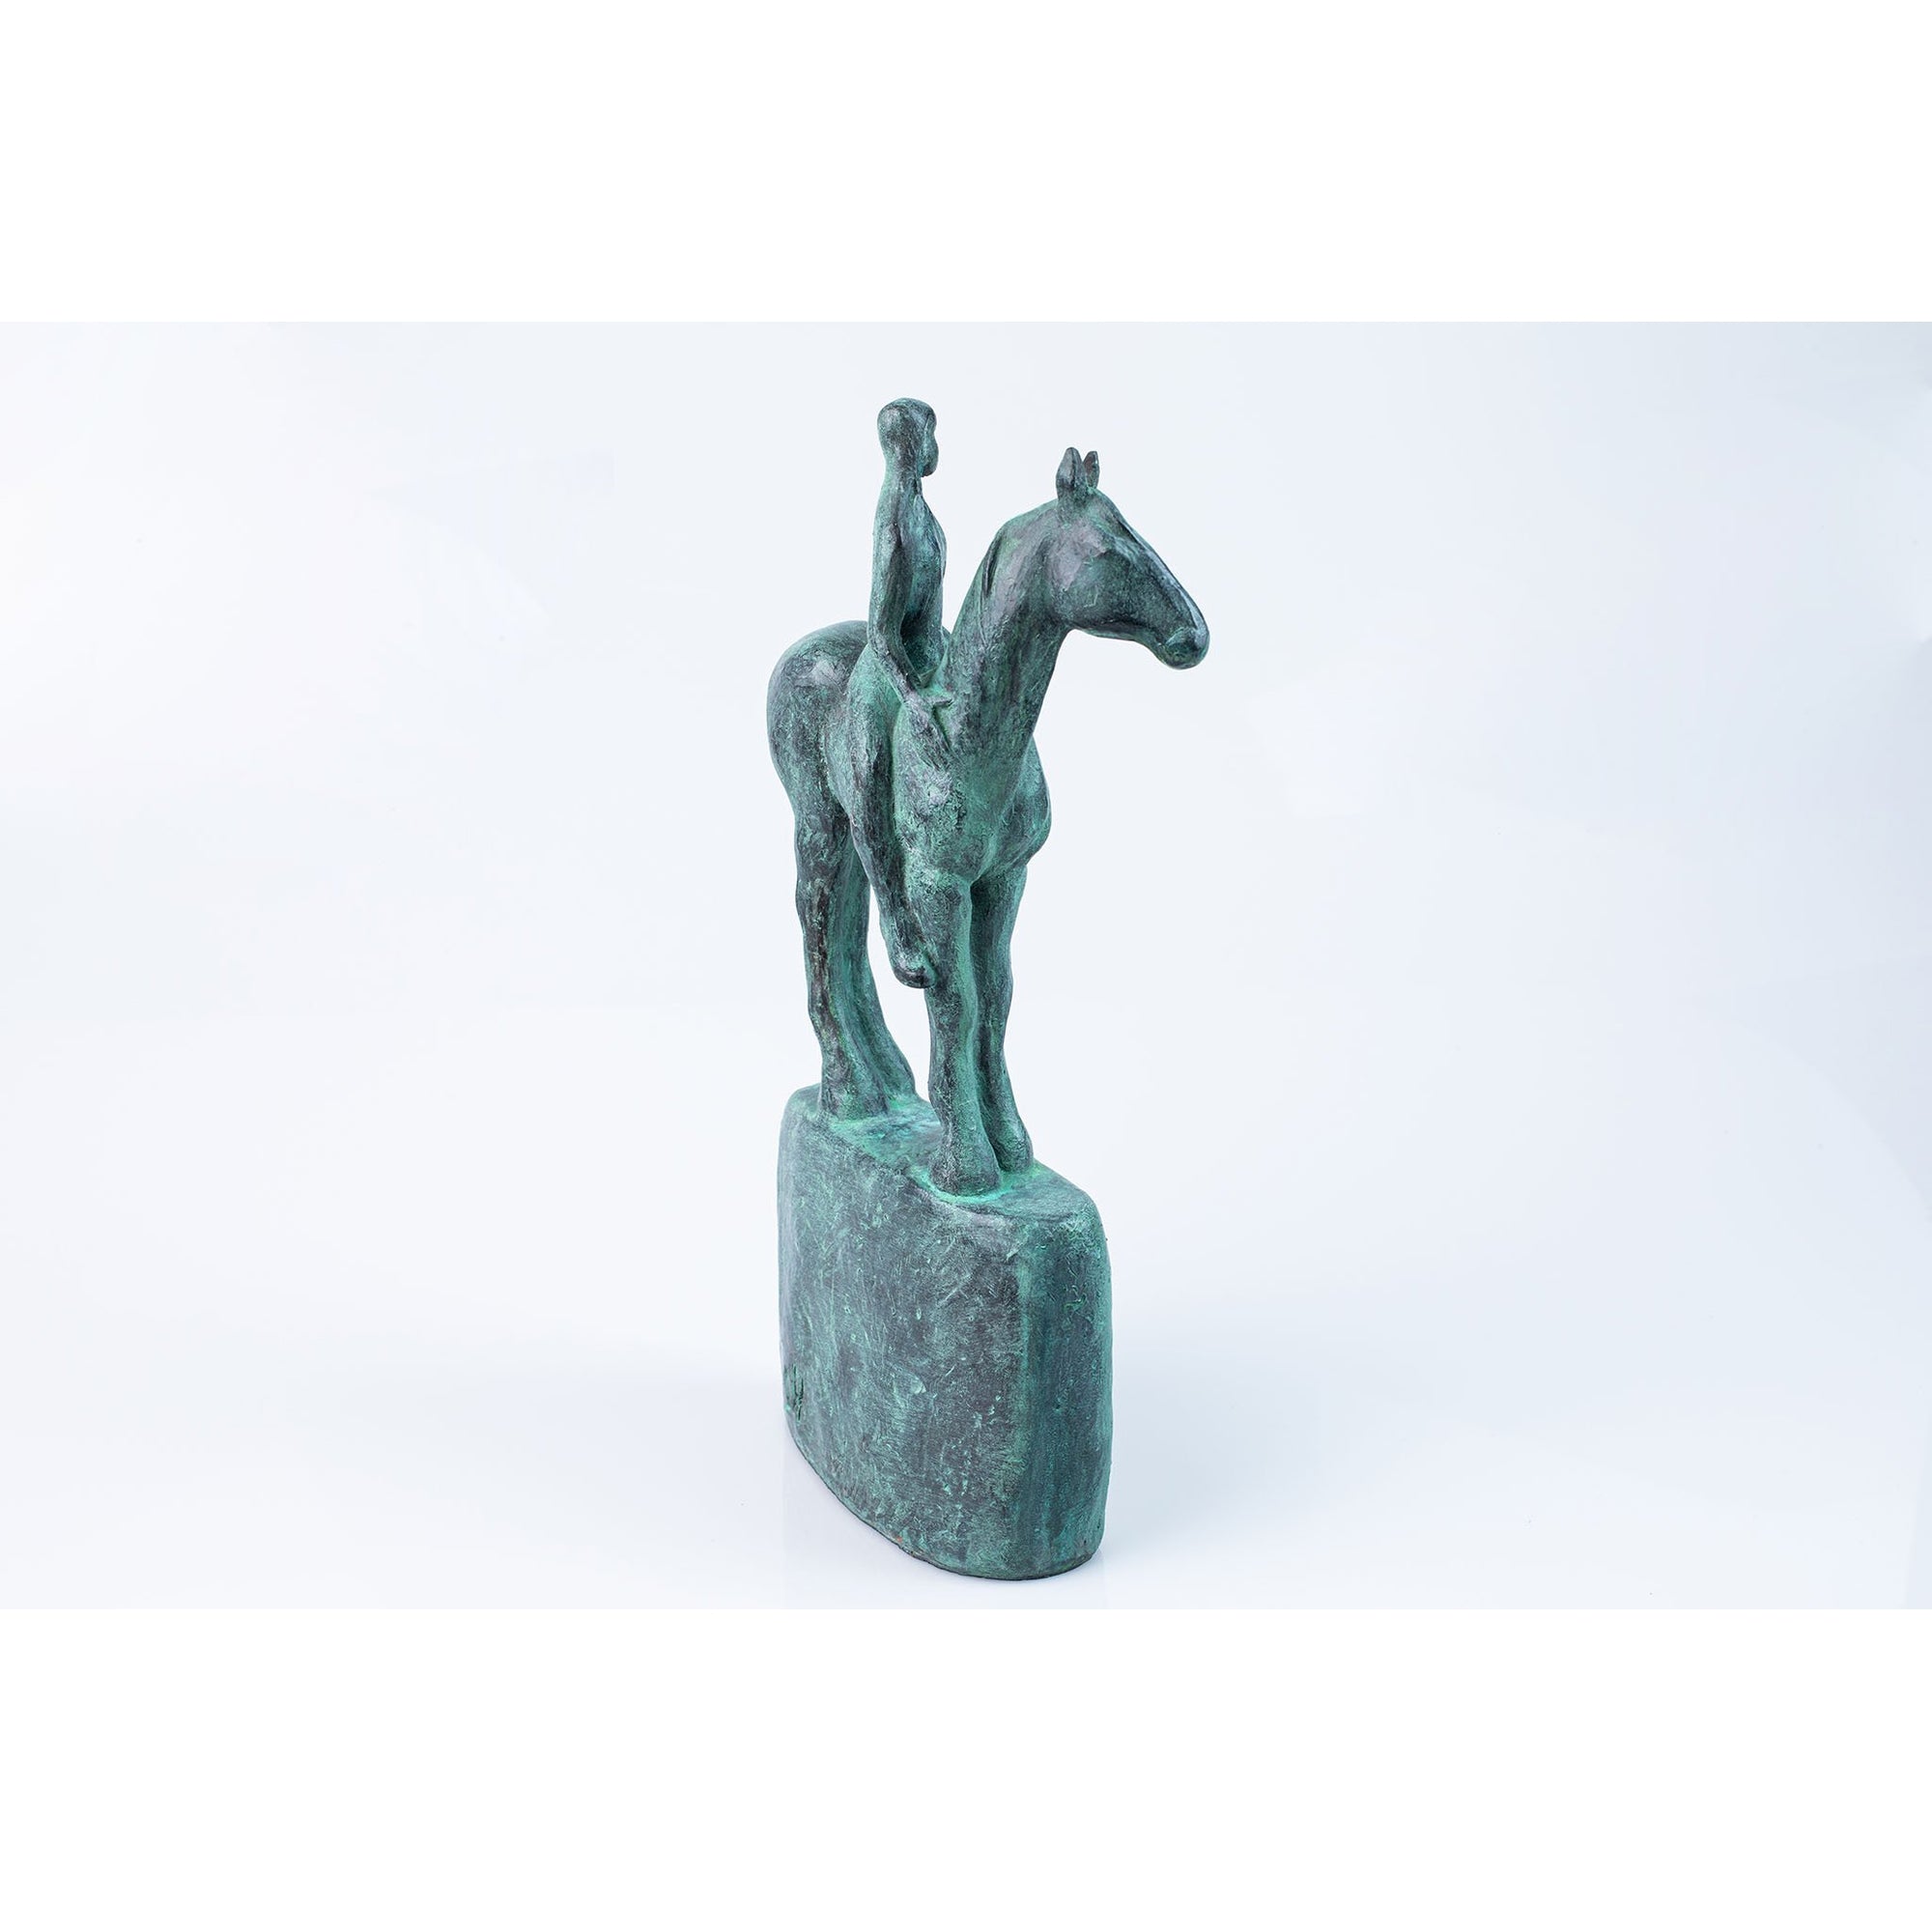 'Leaving' bronze resin by Sophie Howard, at Padstow Gallery, Cornwall